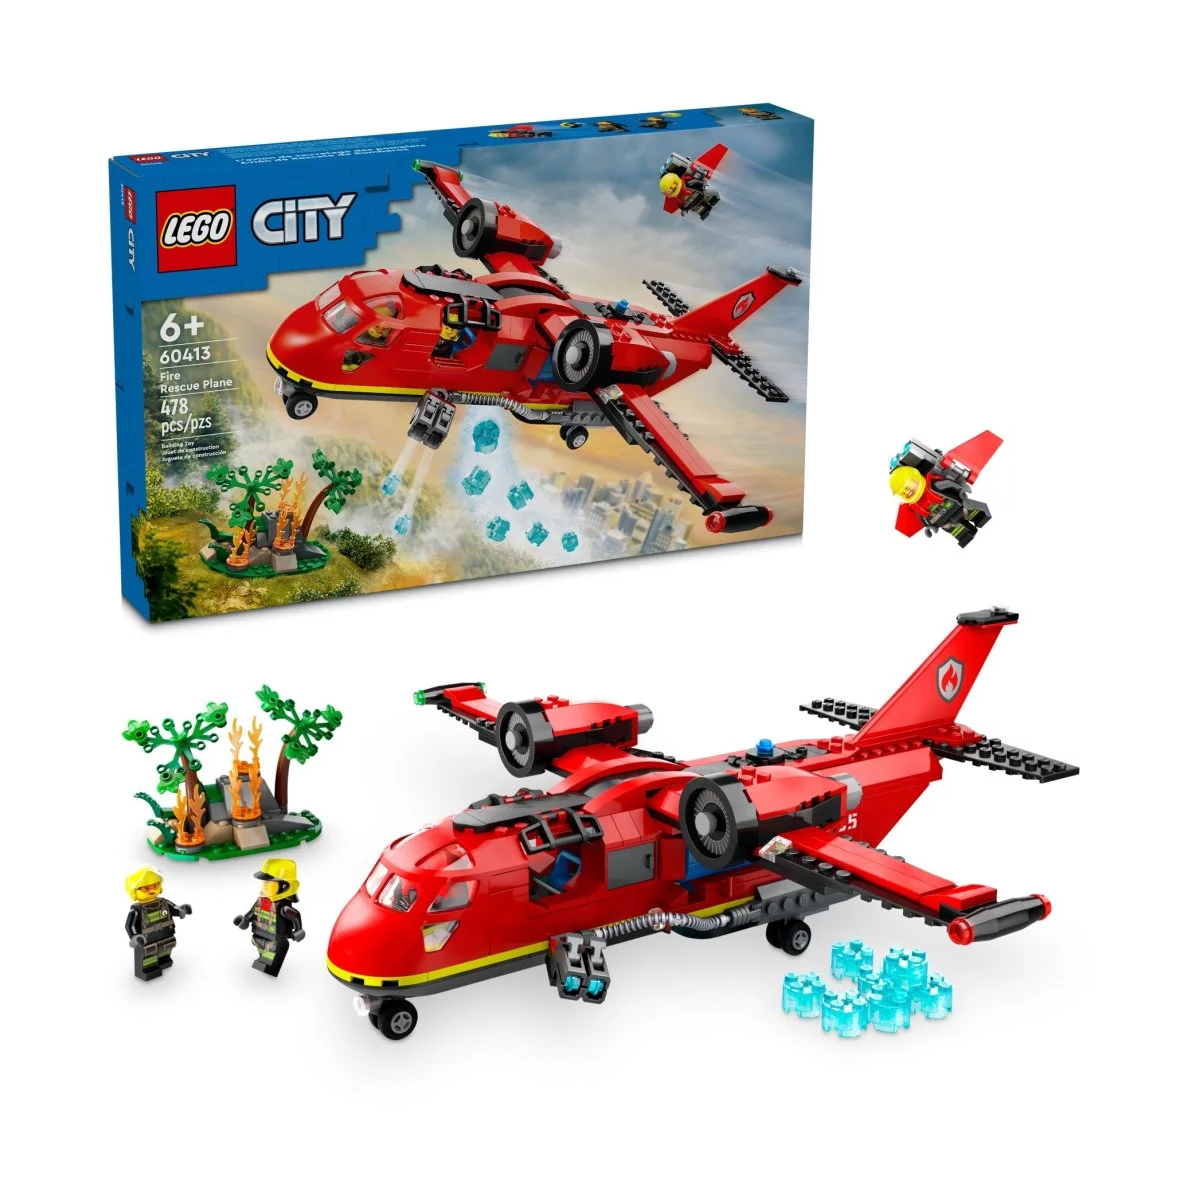 Конструктор Lego City Fire Rescue Plane 60413, 478 деталей конструктор lego city fire rescue motorcycle 60410 57 деталей